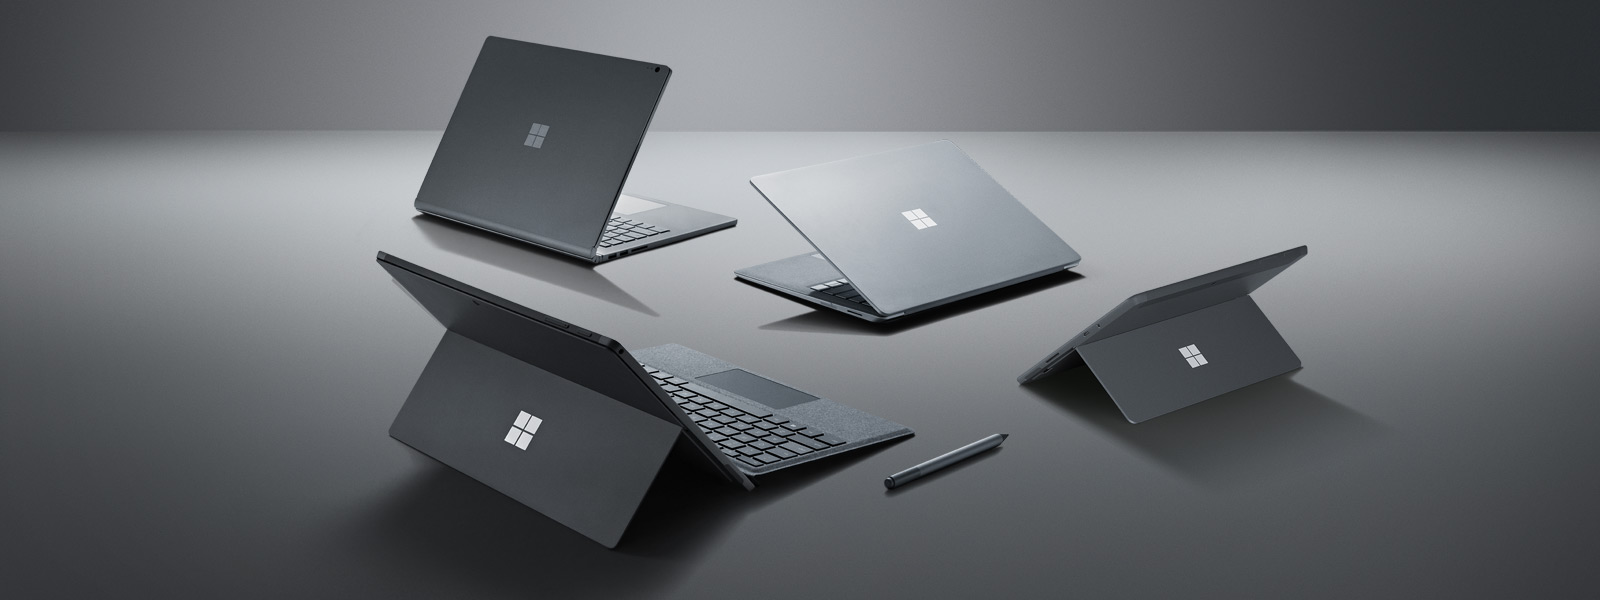 Surface Laptop 2, Surface Pro 6, Surface Go